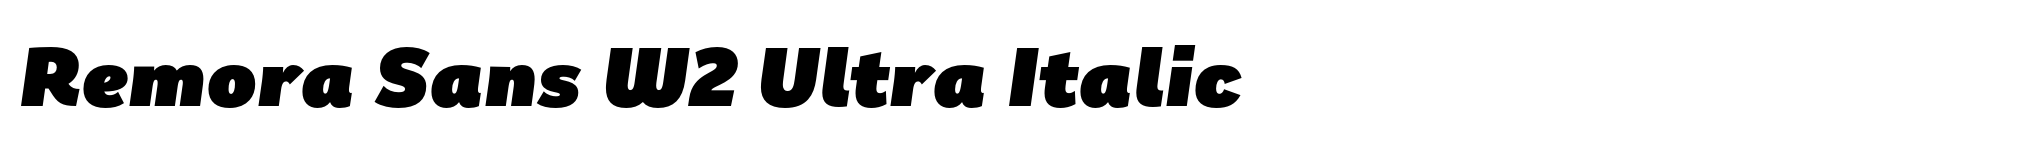 Remora Sans W2 Ultra Italic image